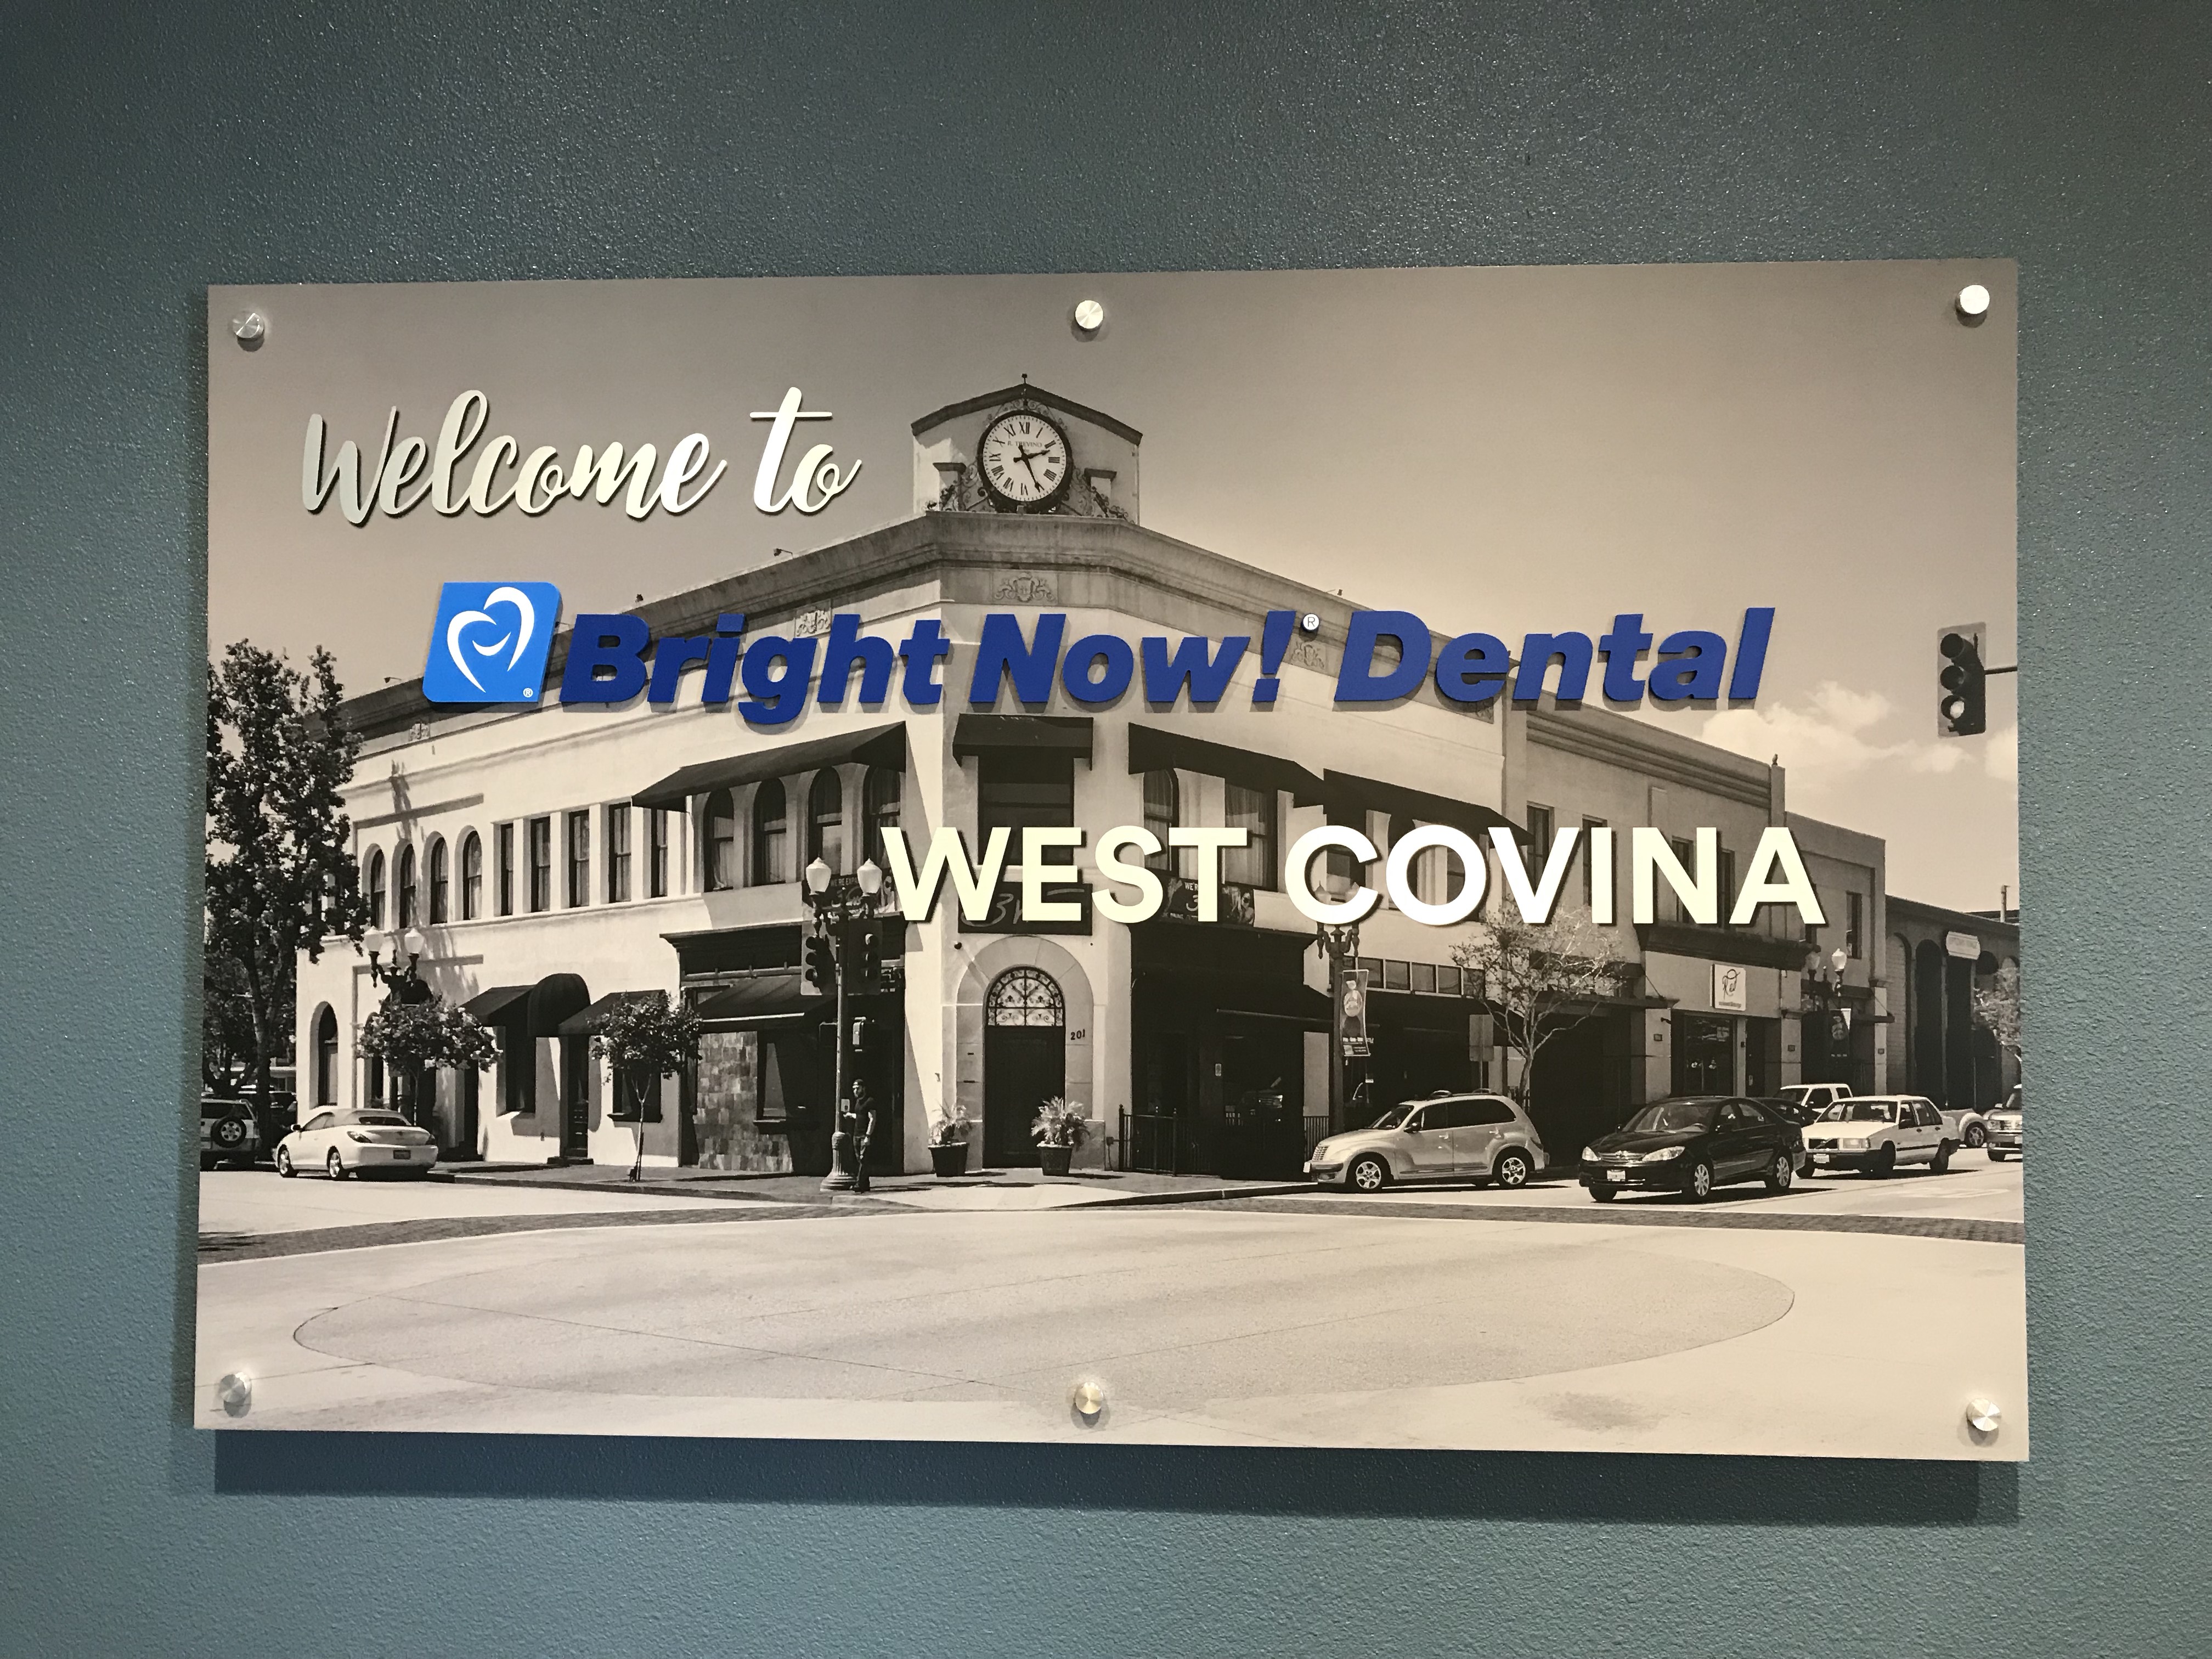 New West Covina Dentist